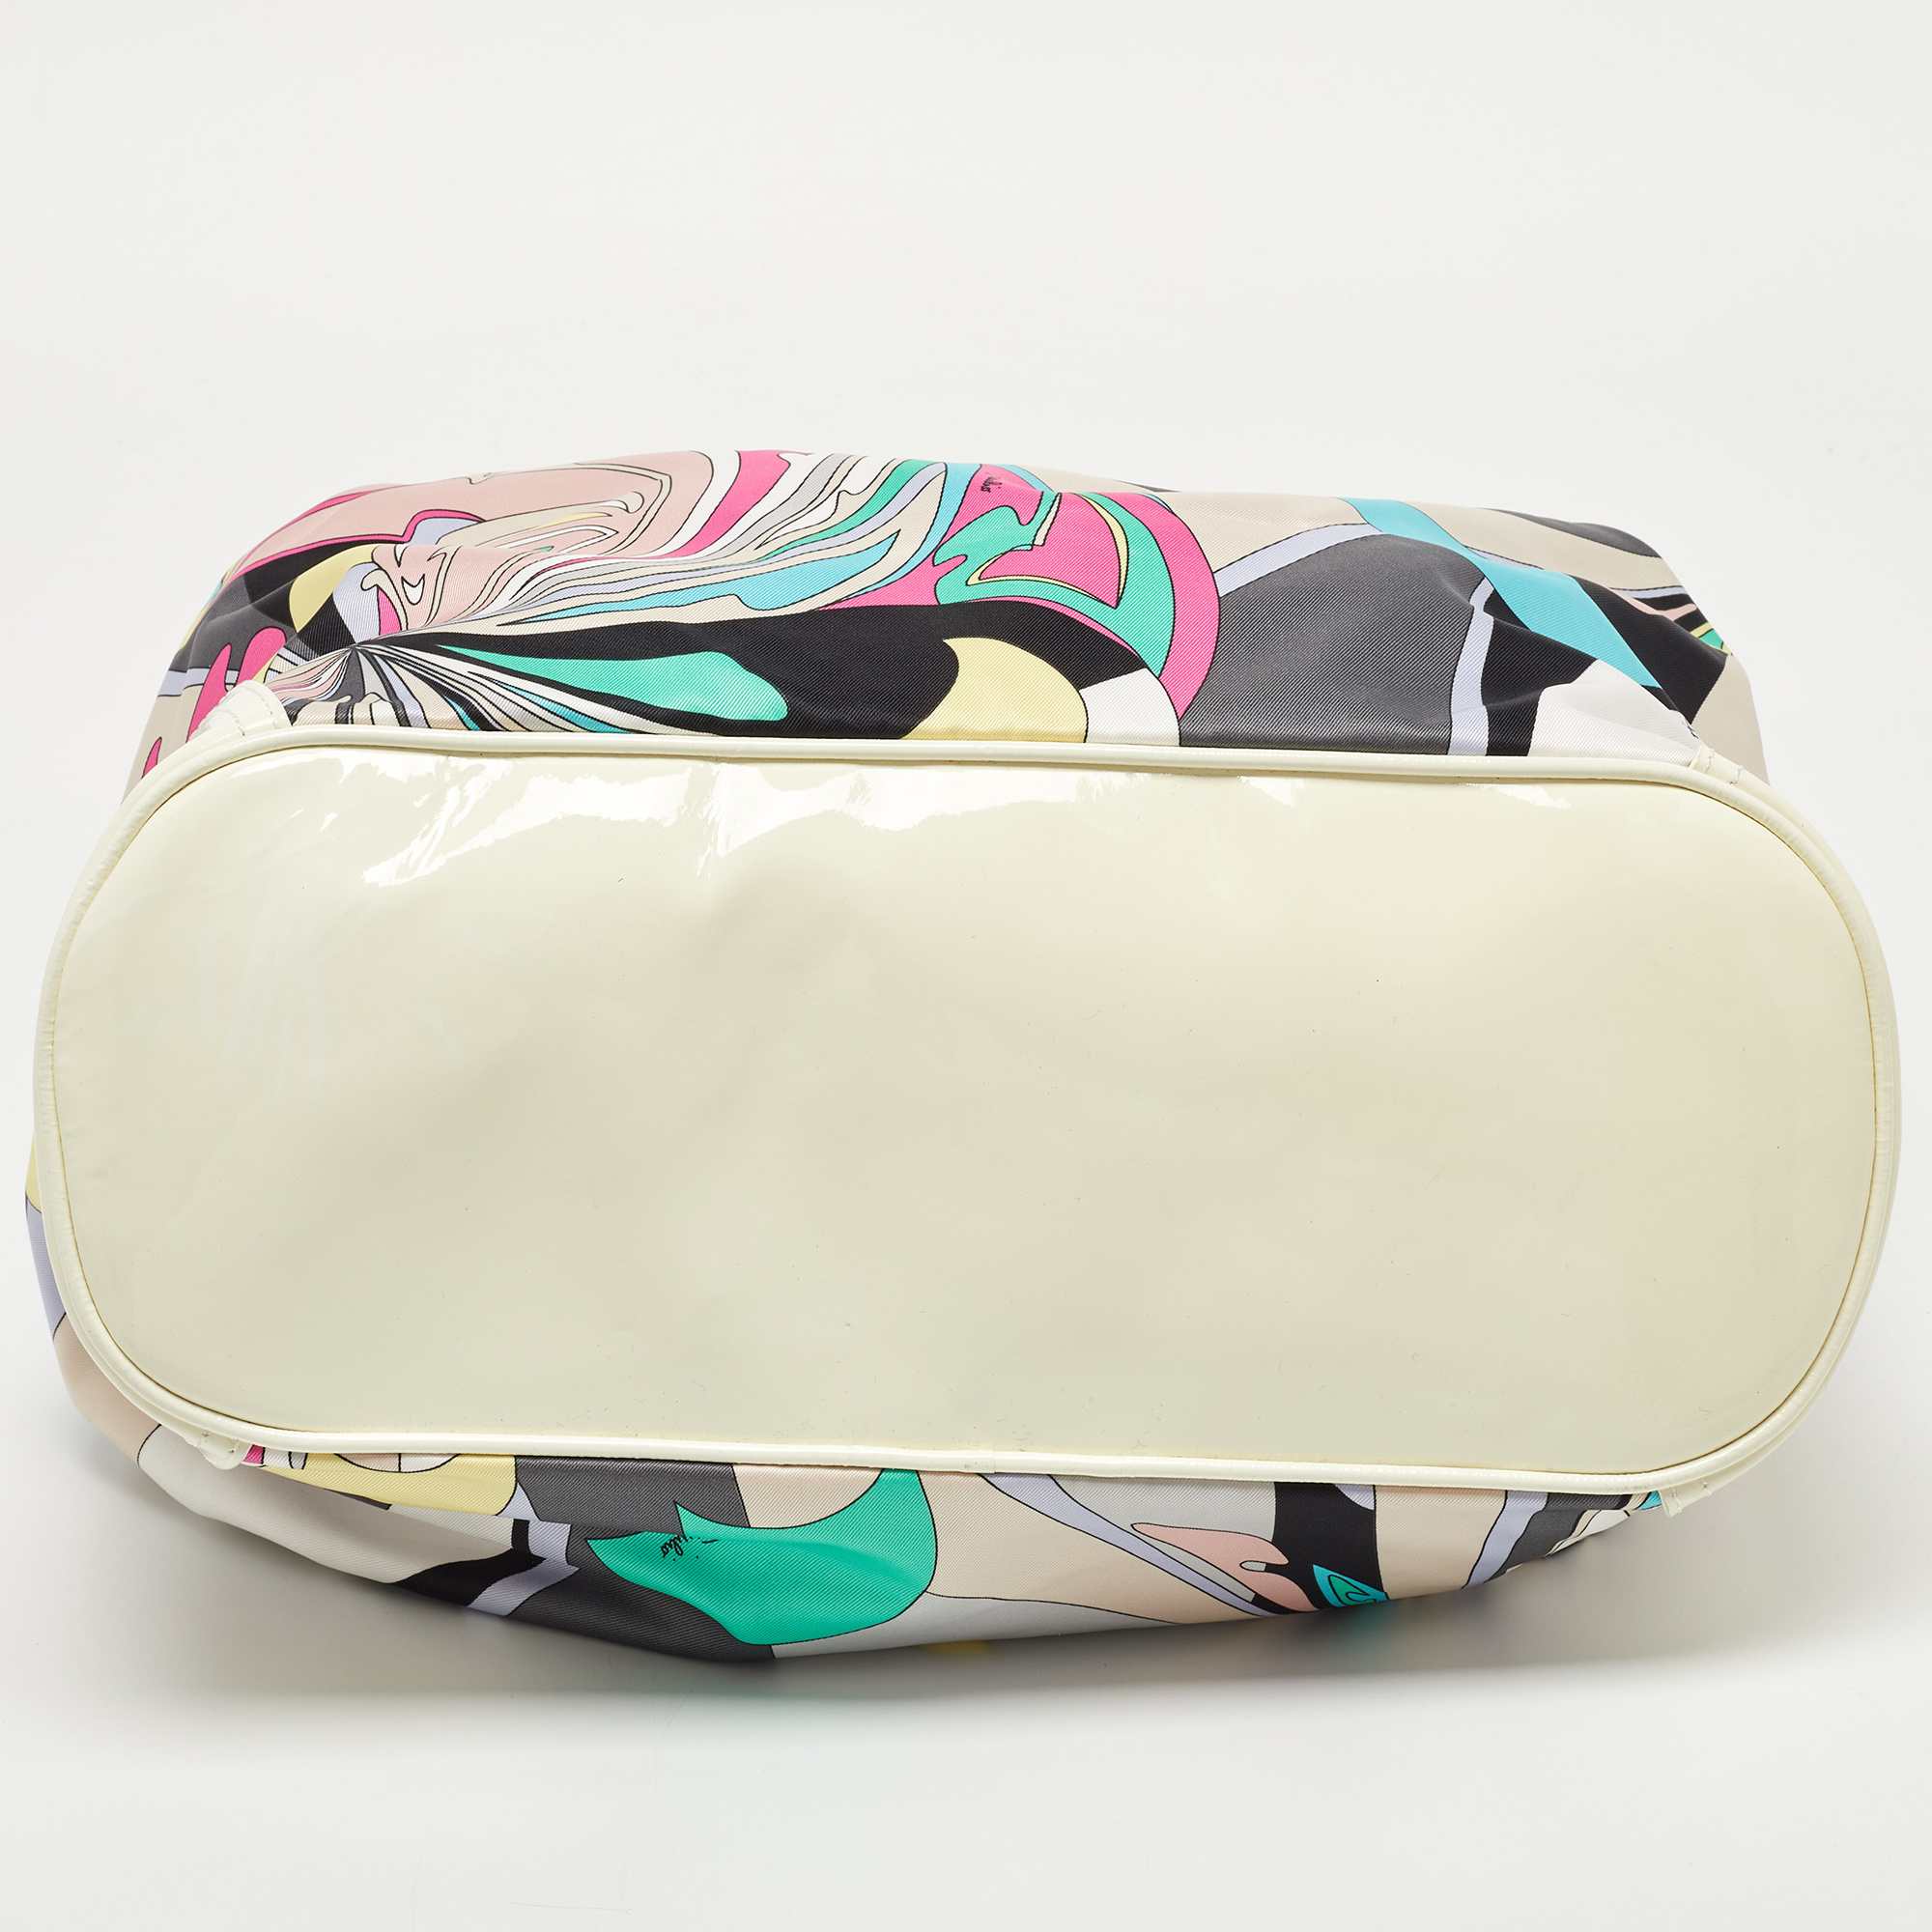 Emilio Pucci Multicolor Satin And Patent Leather Drawstring Shoulder Bag